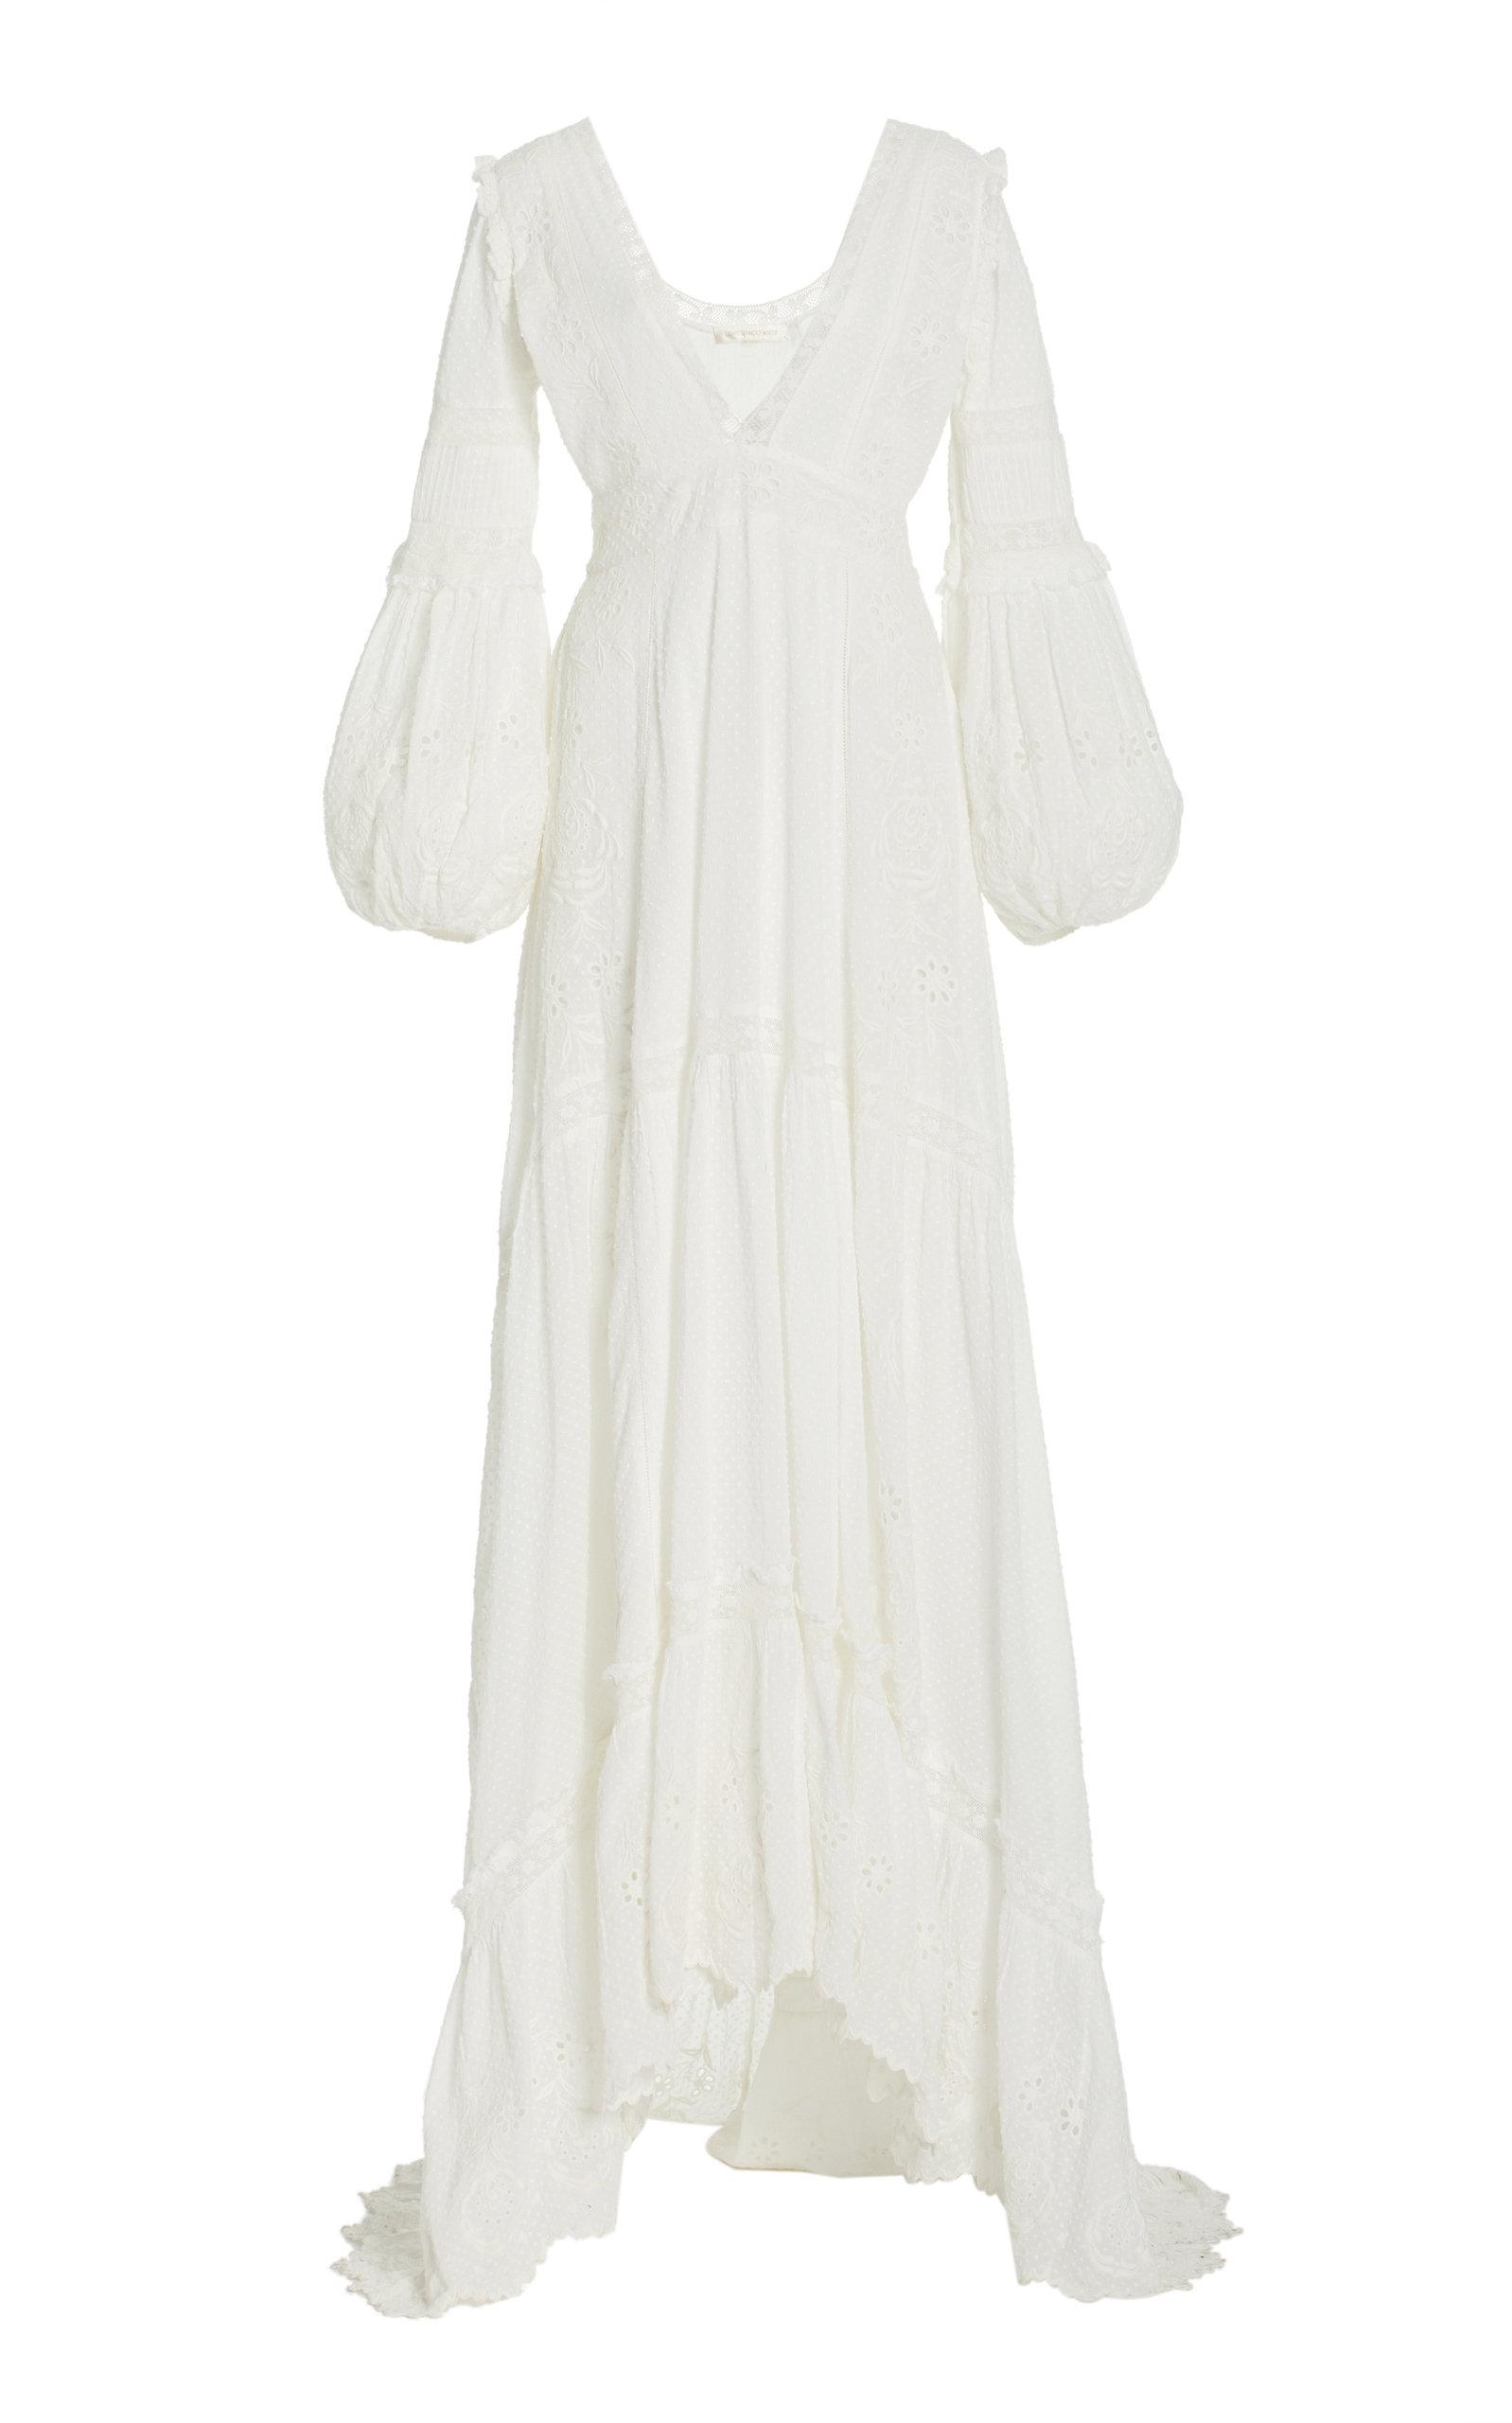 Louis Vuitton Meli-melo Embroidered Dress White Cotton. Size 6 Months